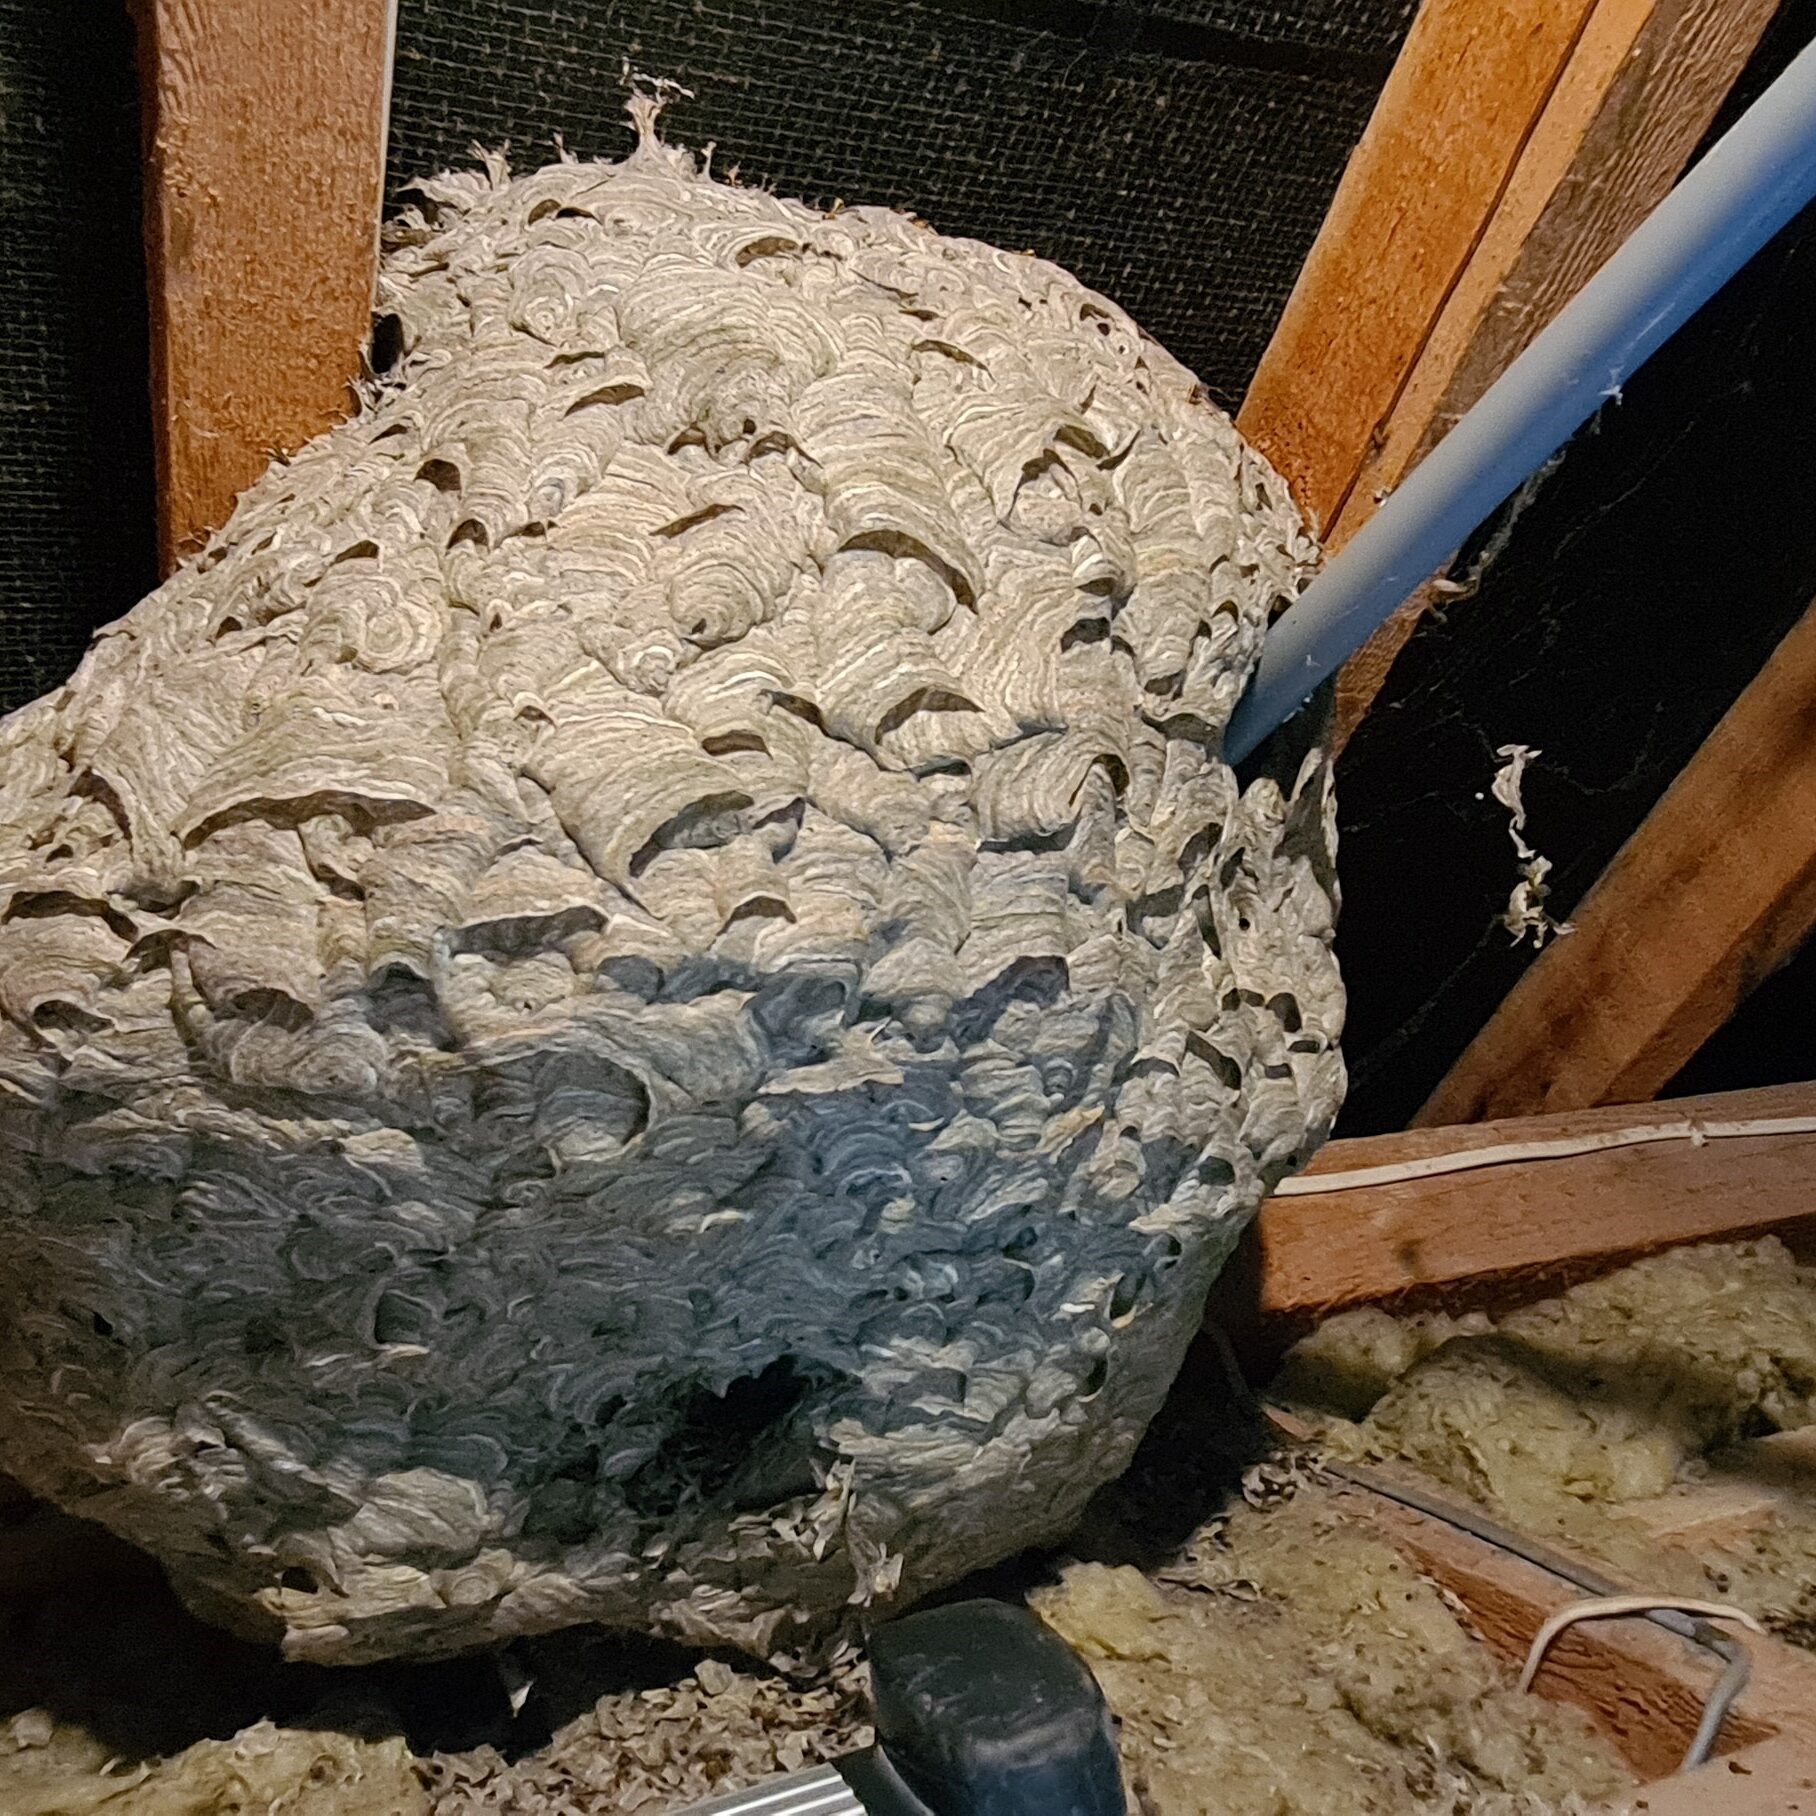 Wasp nest in loft